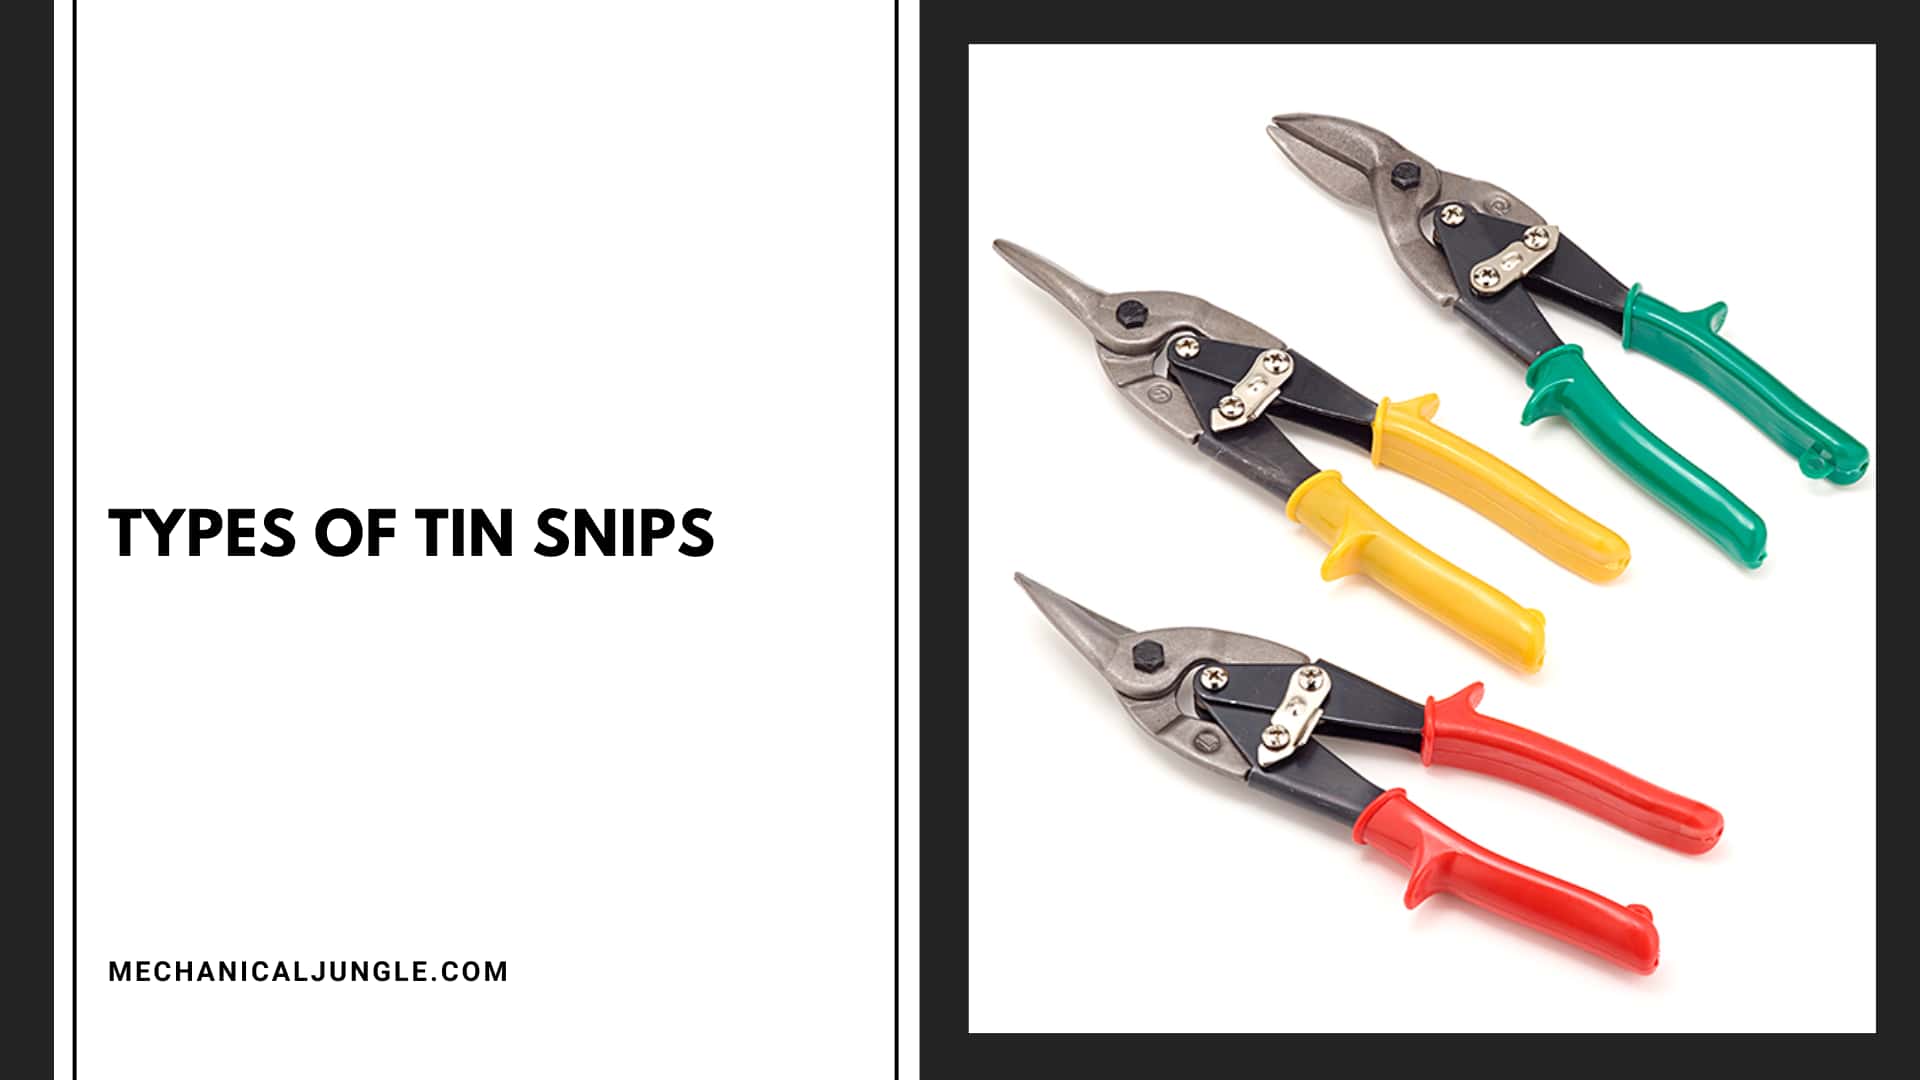 Types of Tin Snips